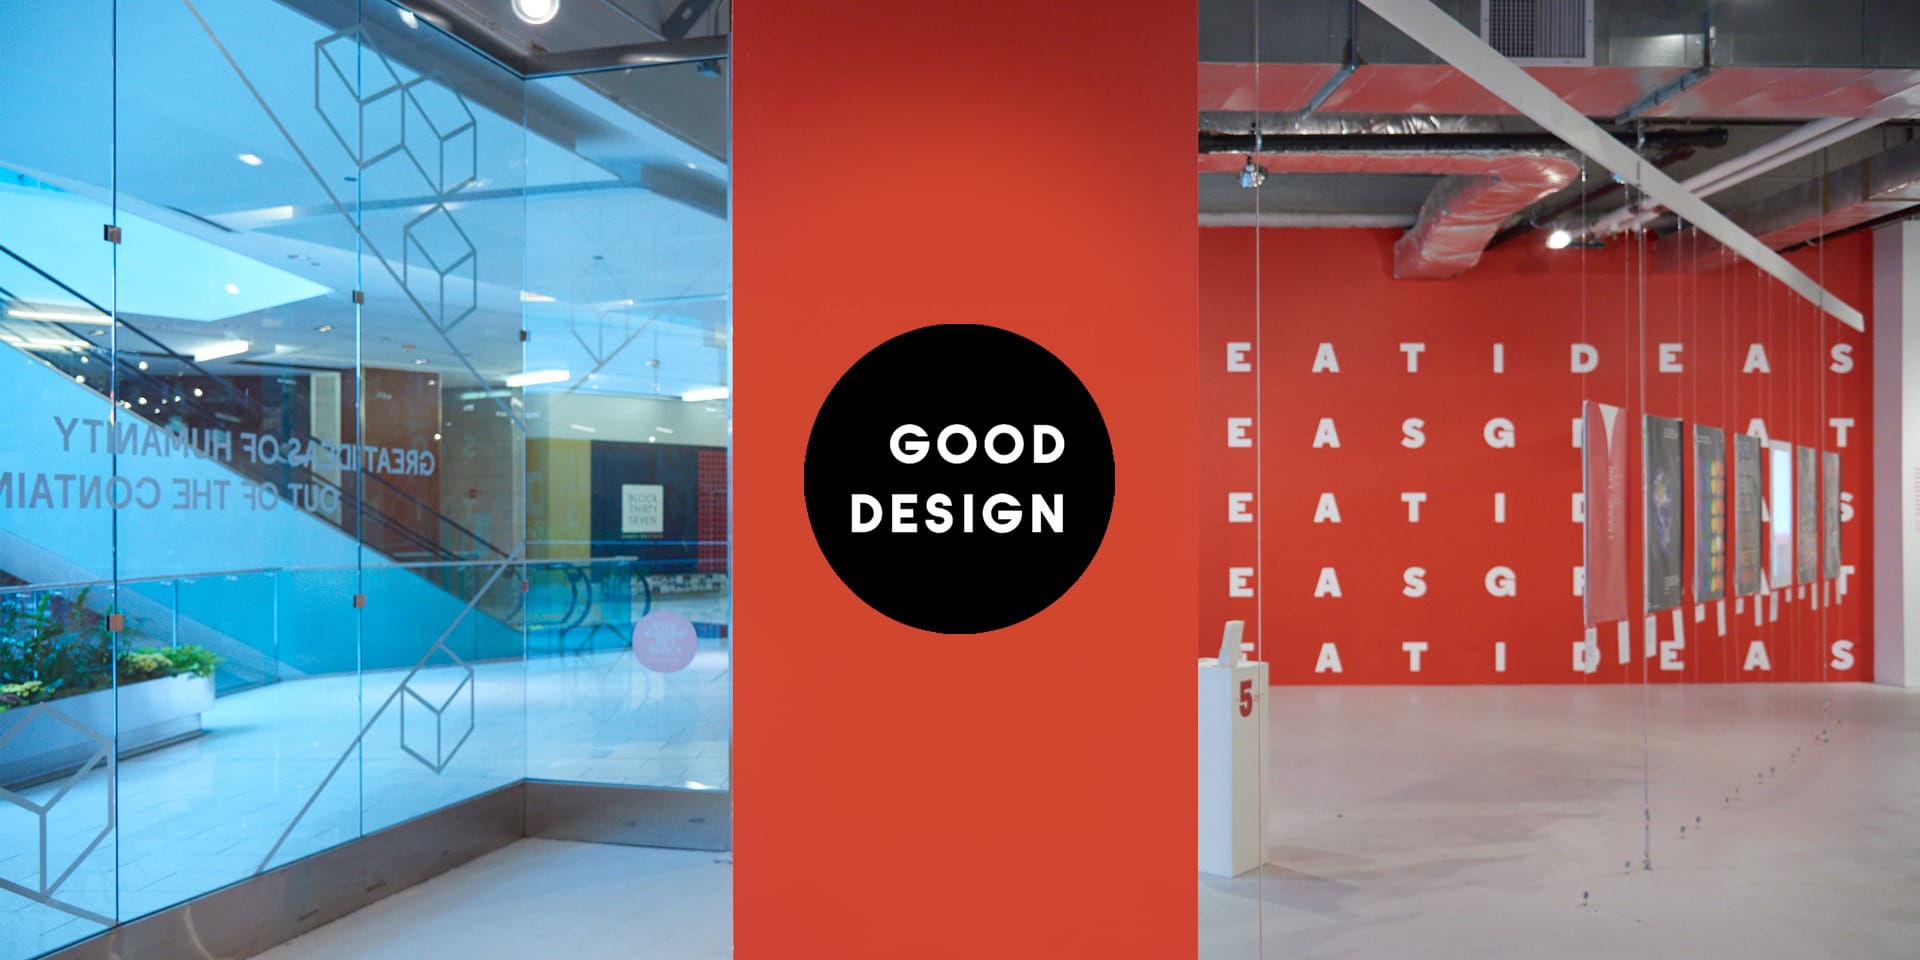 The Good Design Awards